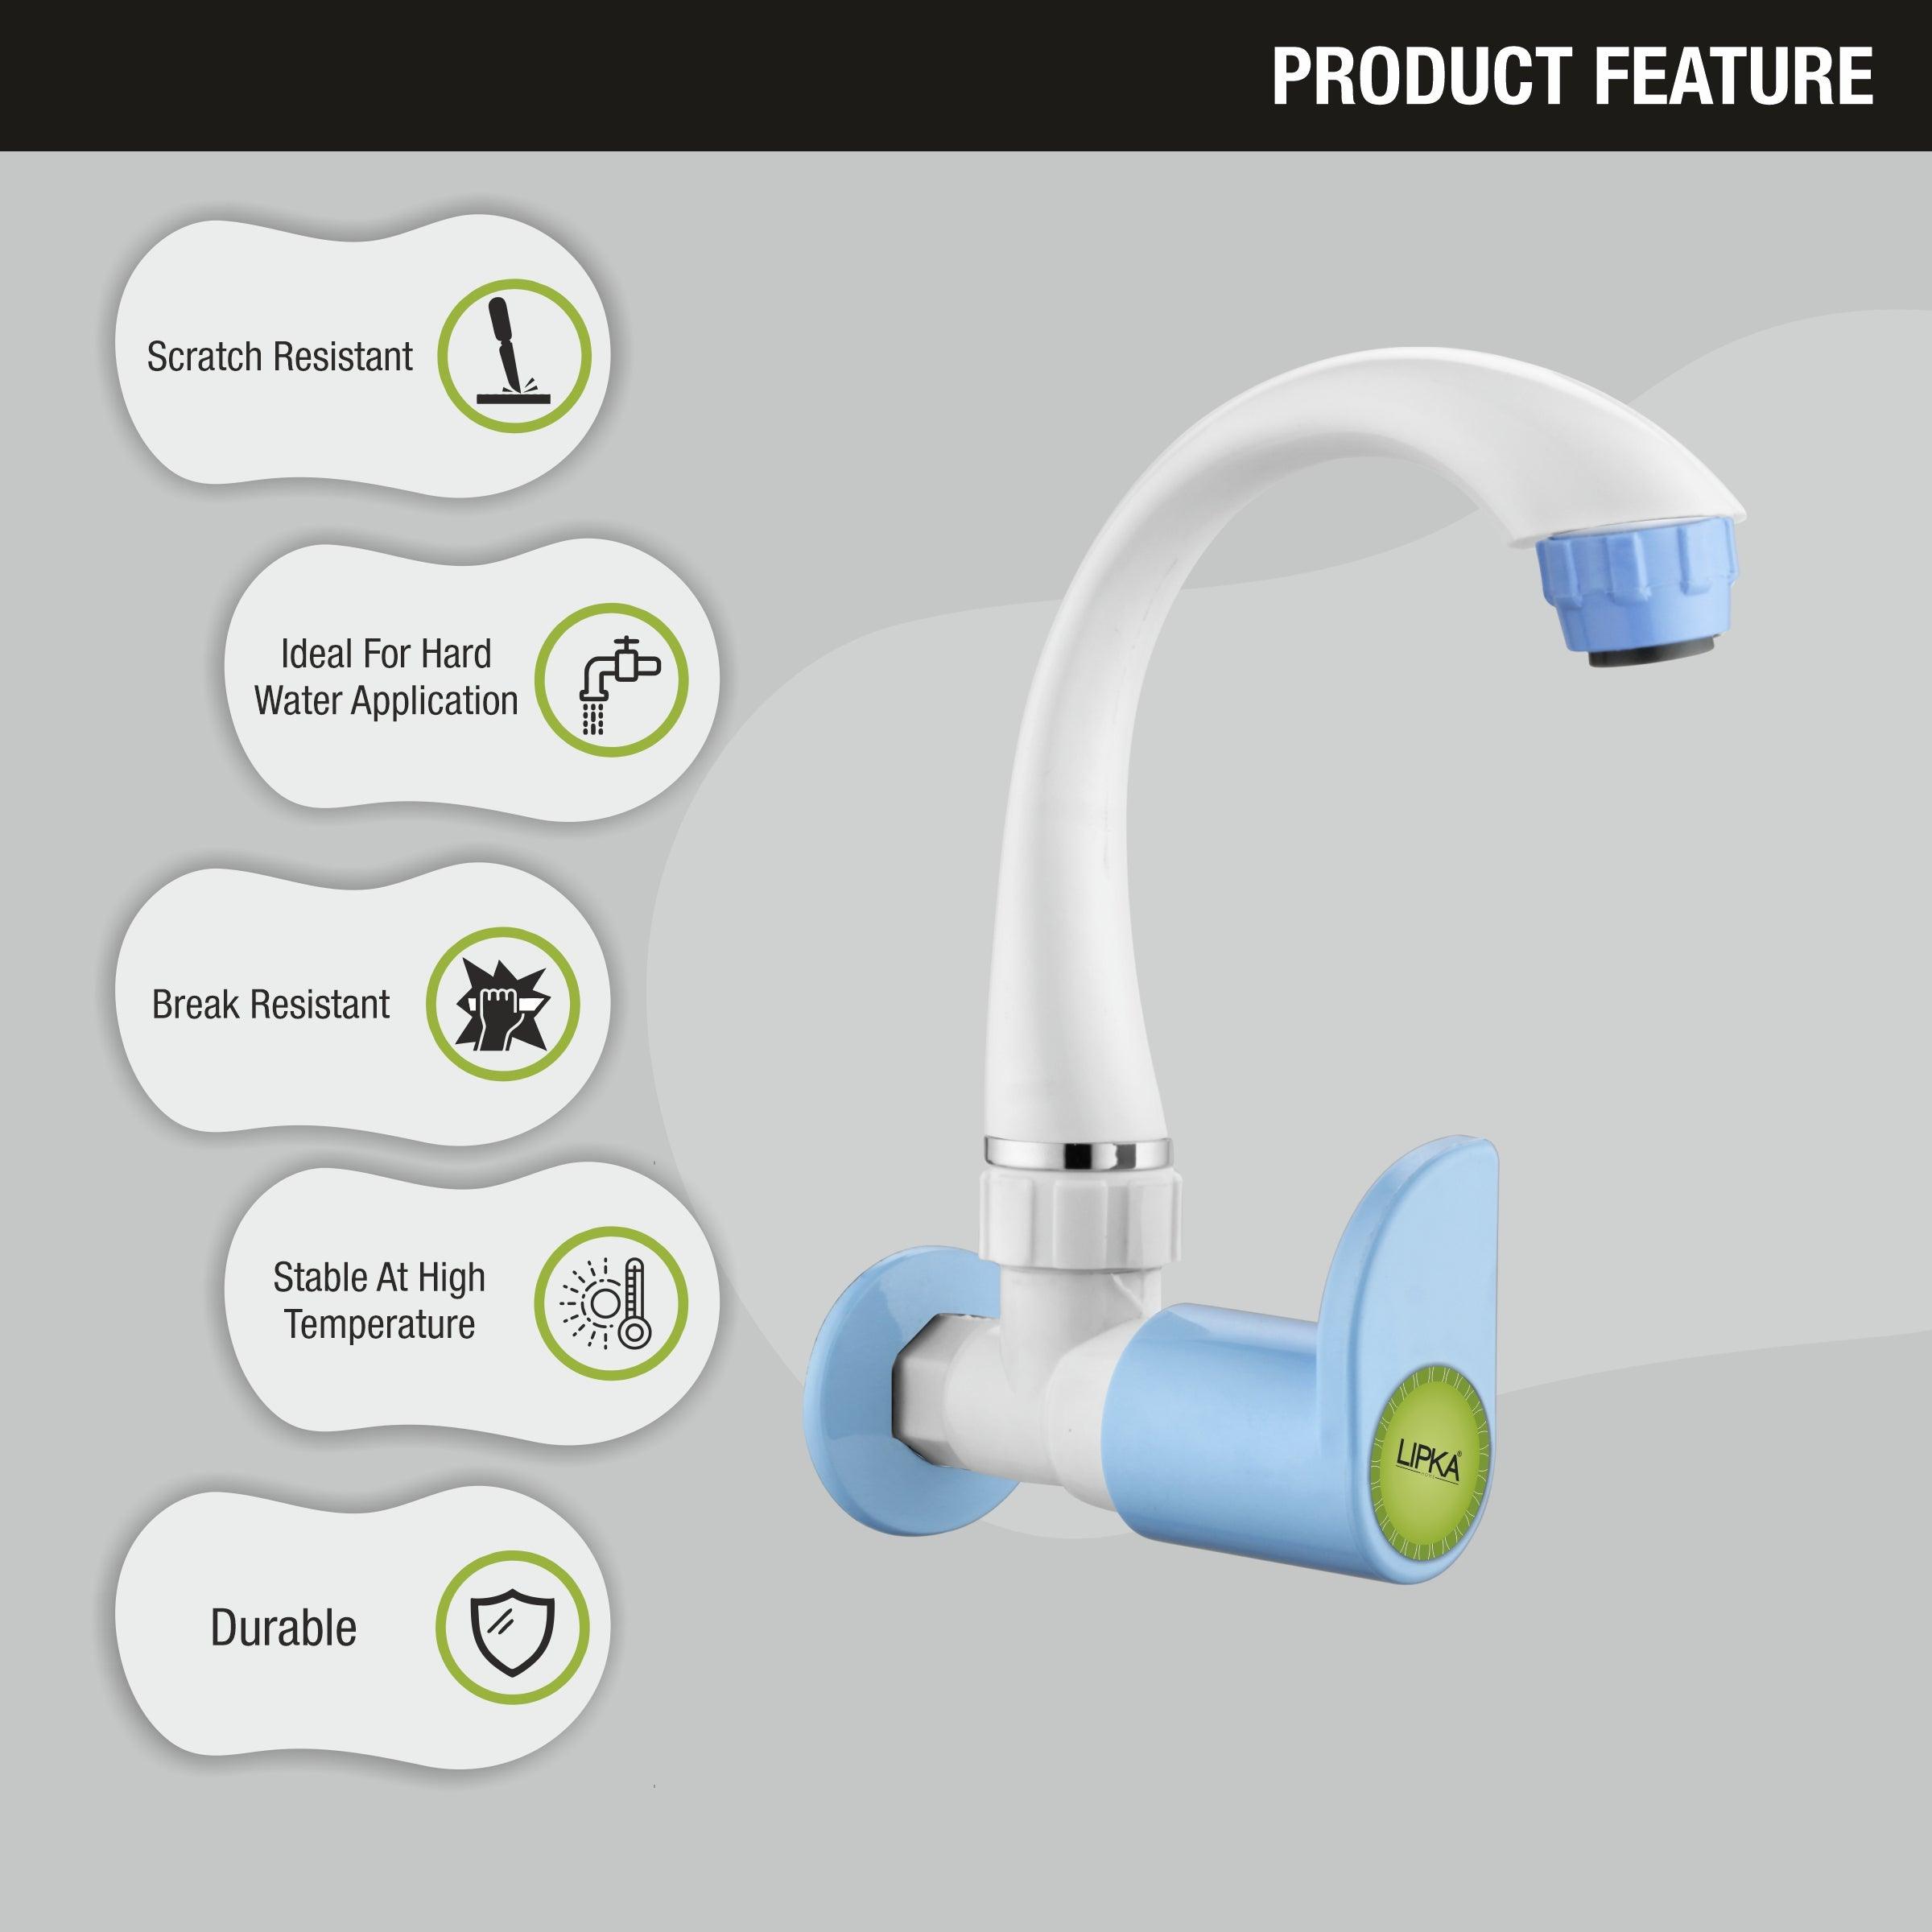 Sky Sink Tap with Swivel Spout PTMT Faucet features